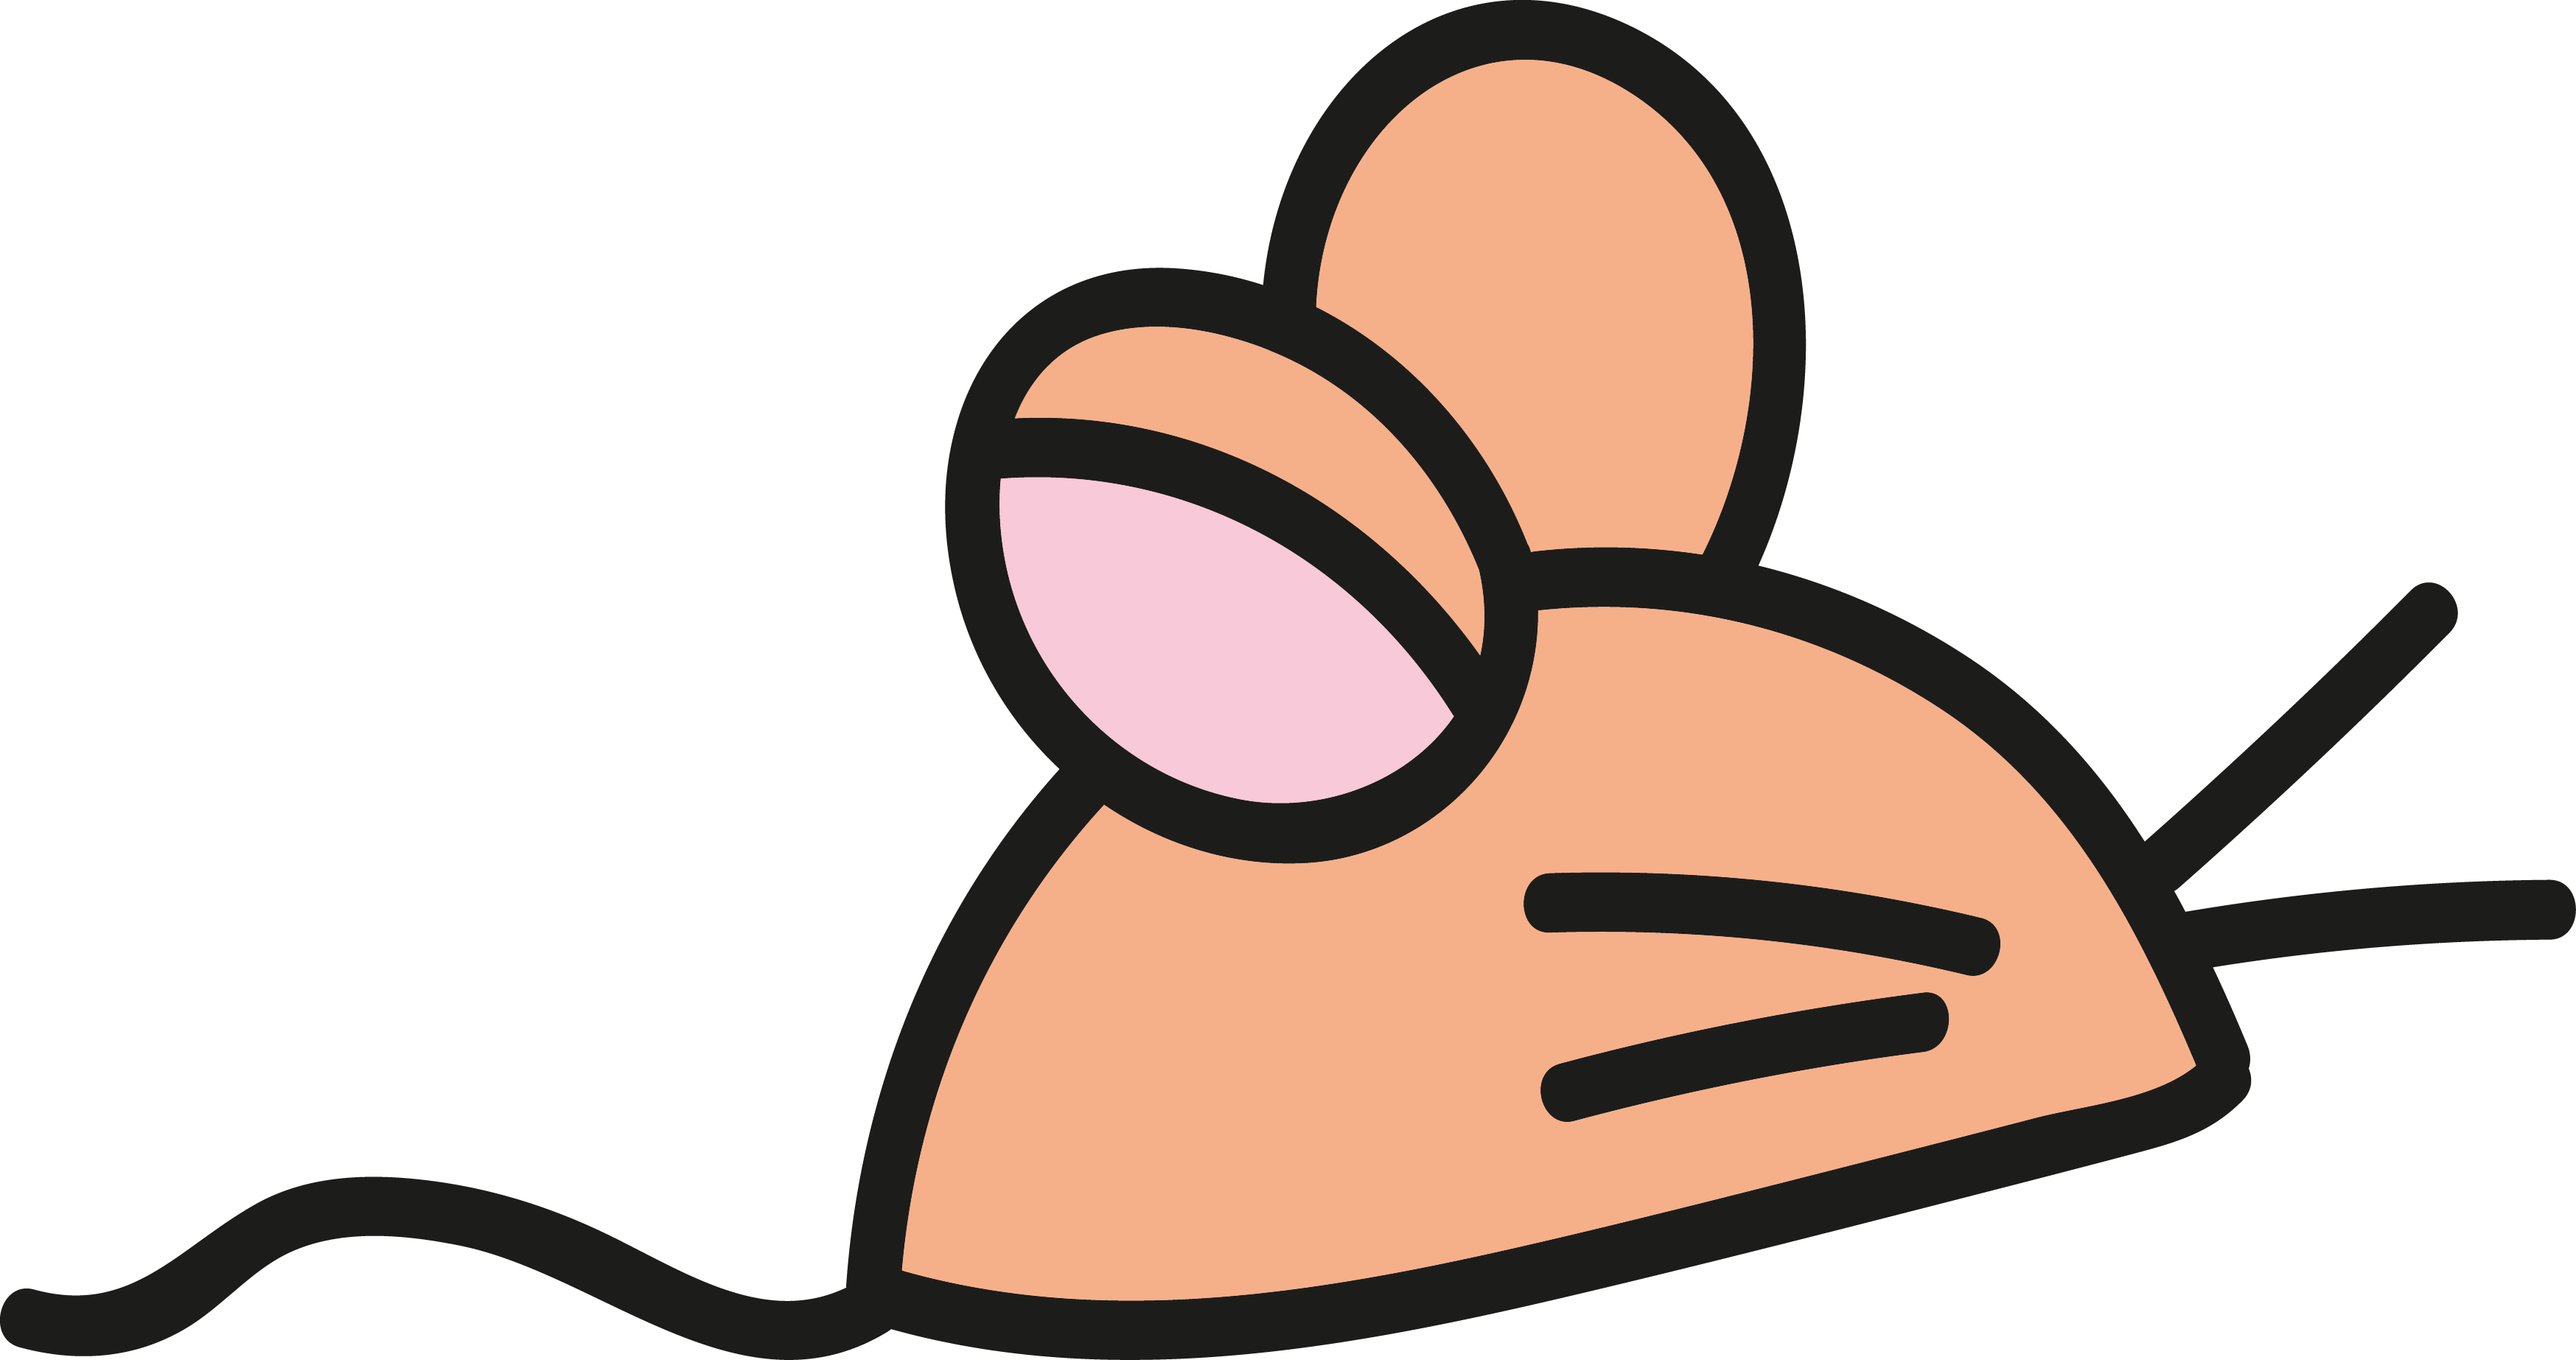 Cat cartoon clip art. Finger clipart mouse